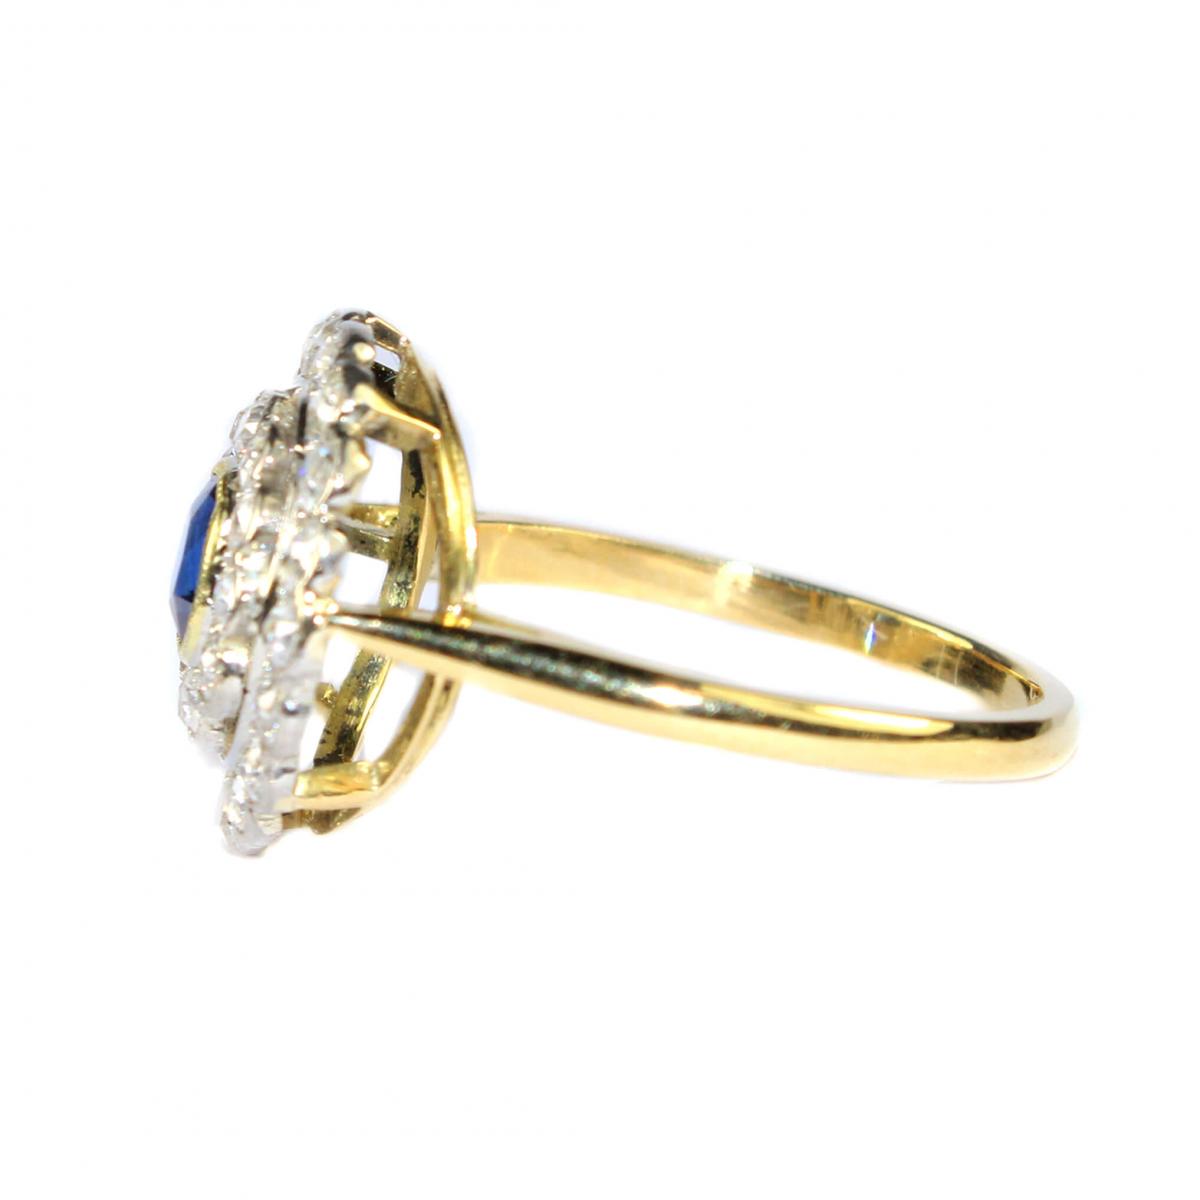 Edwardian Sapphire & Diamond Double Cluster Ring c.1920